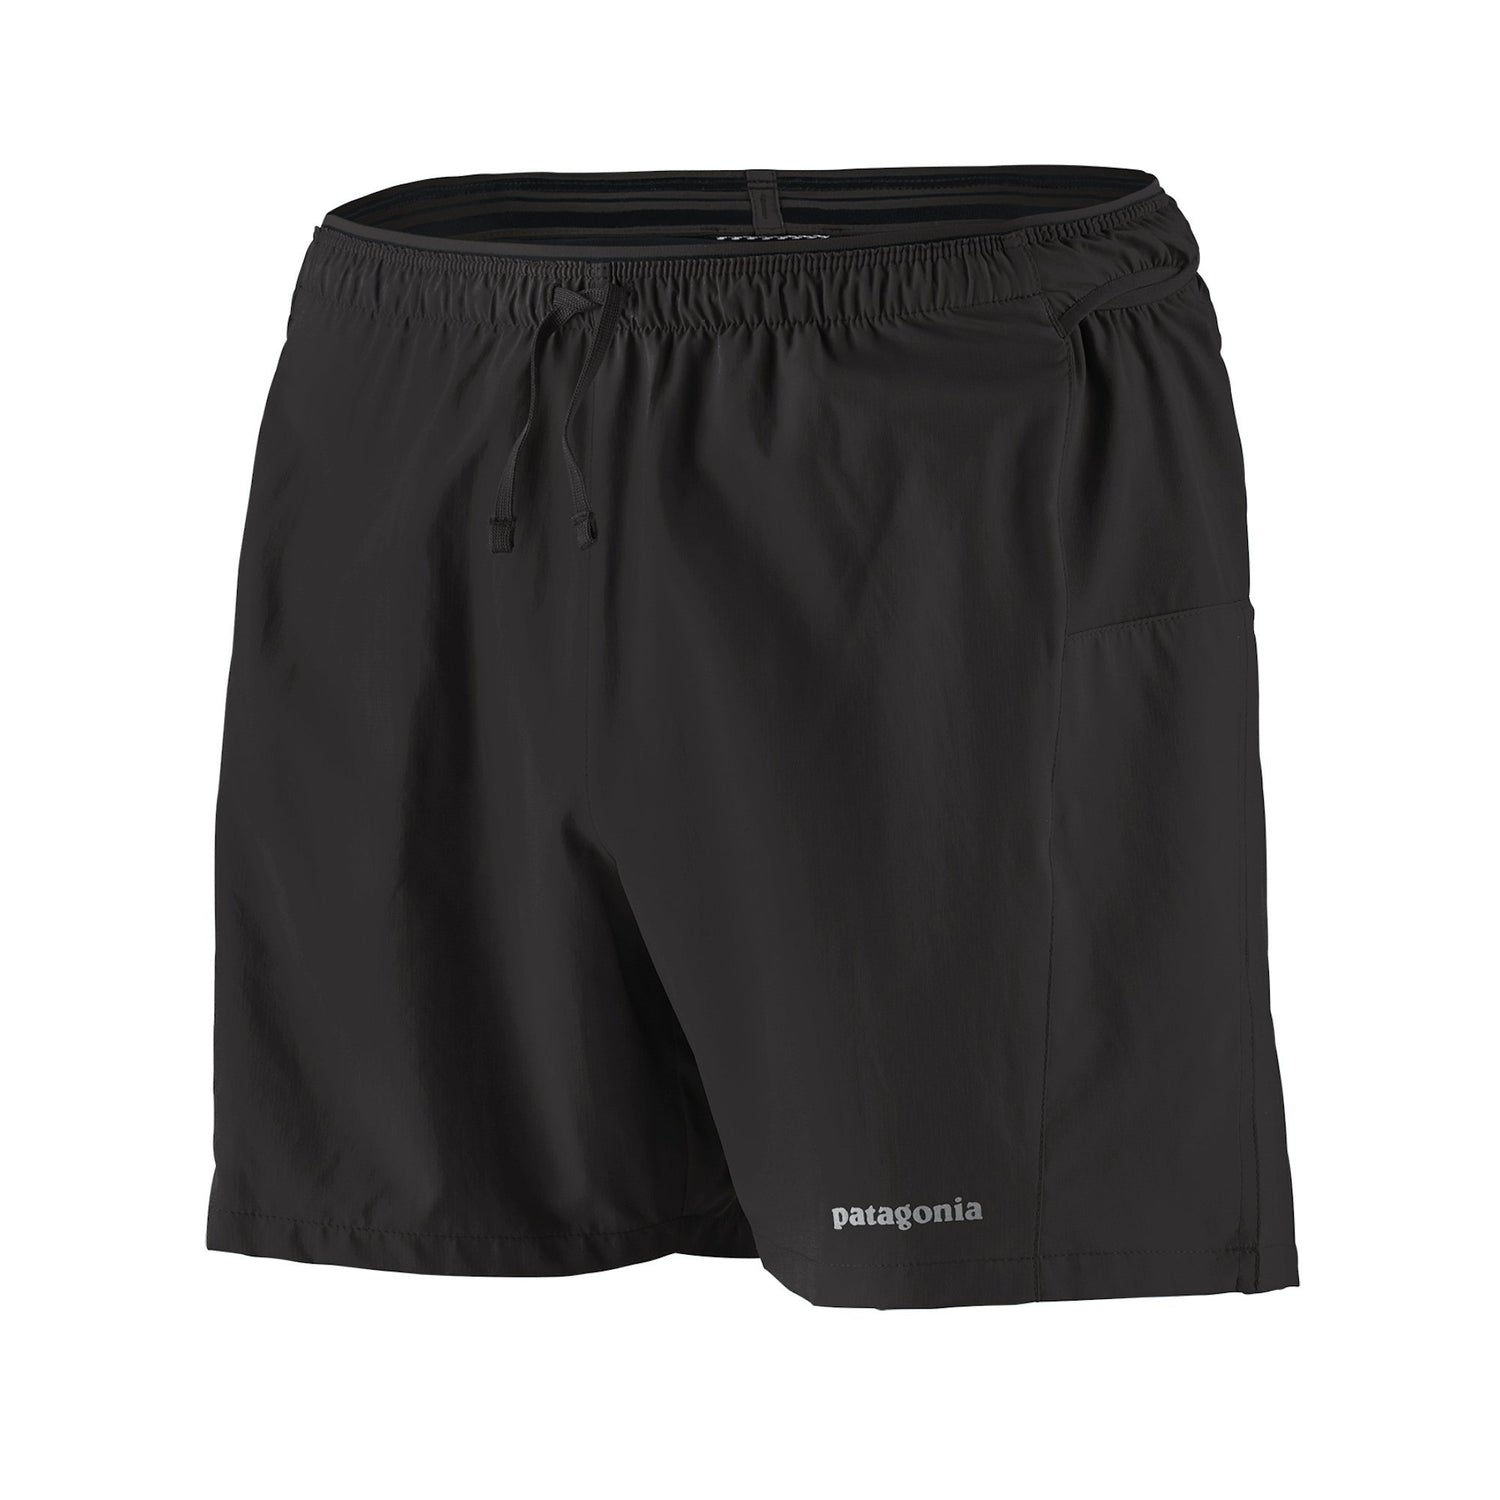 Patagonia M's Strider Pro Running Shorts - 5